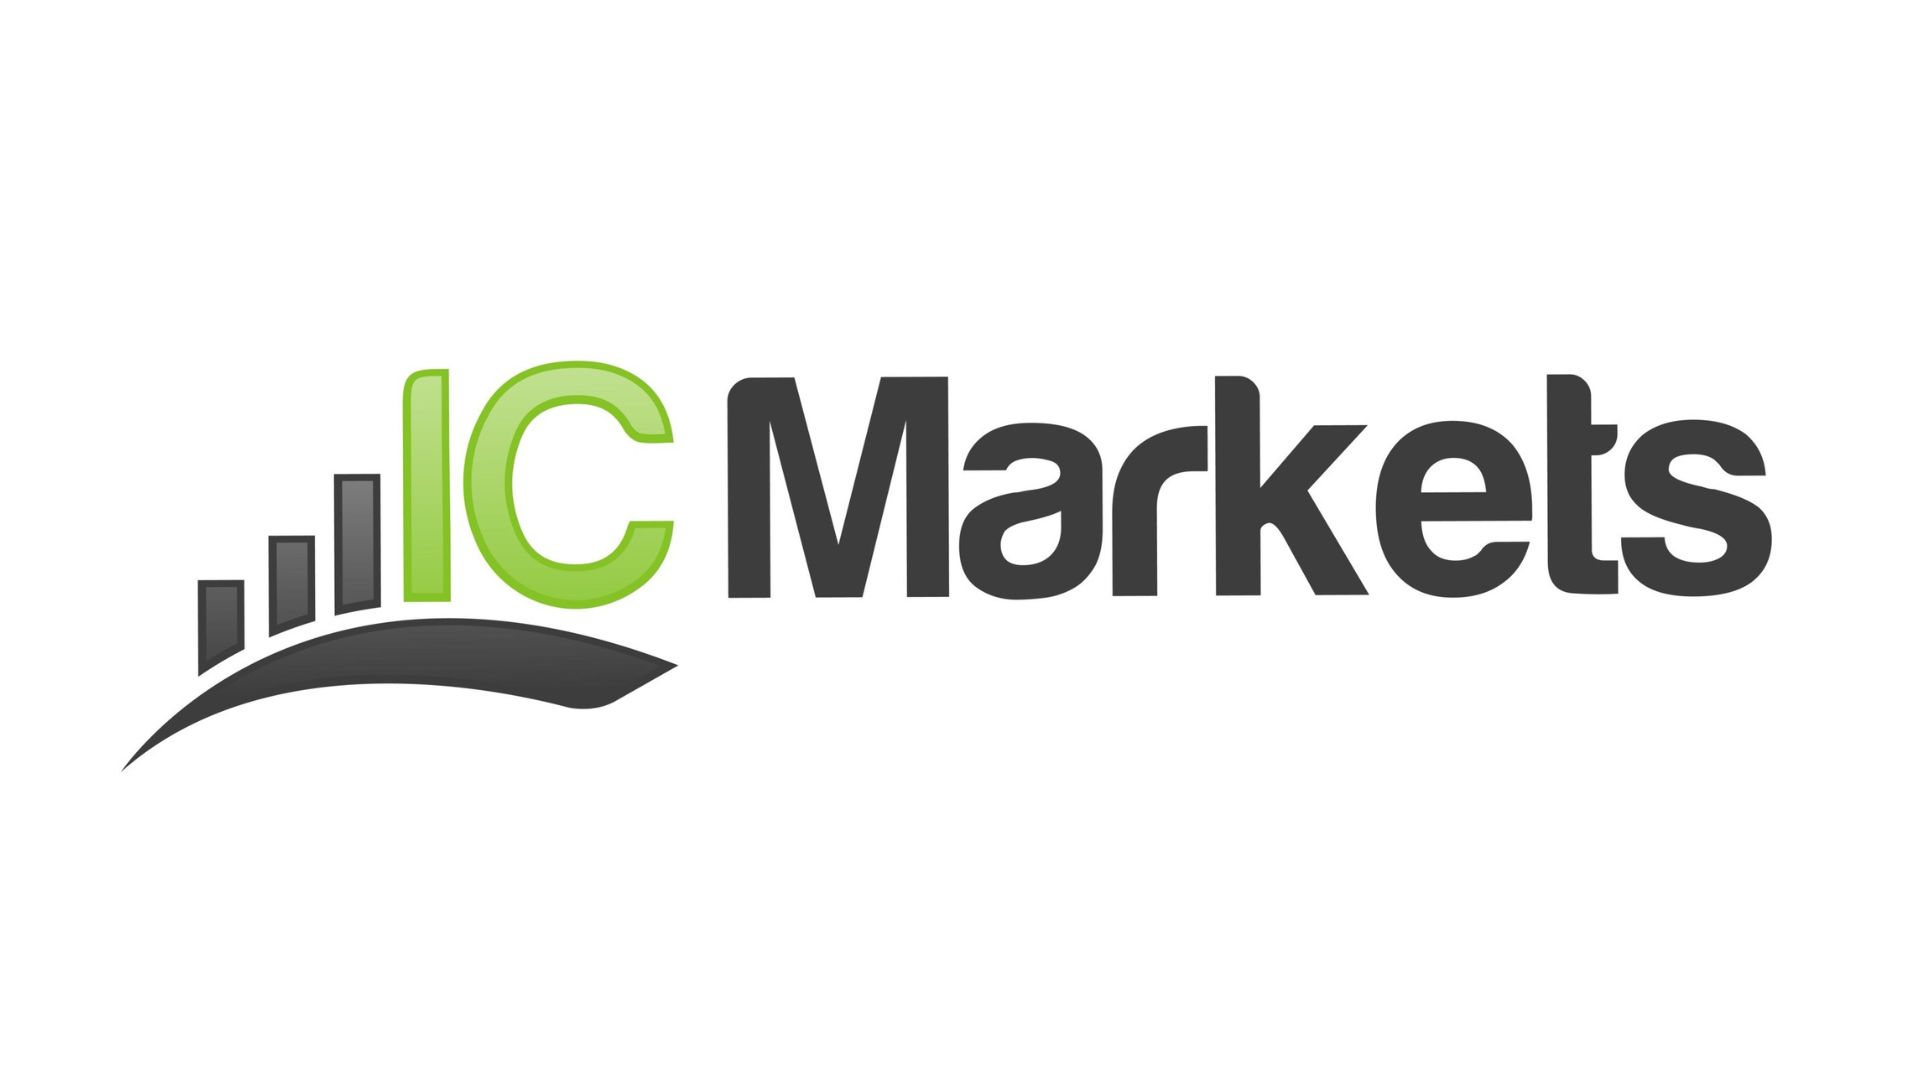  IC Markets  